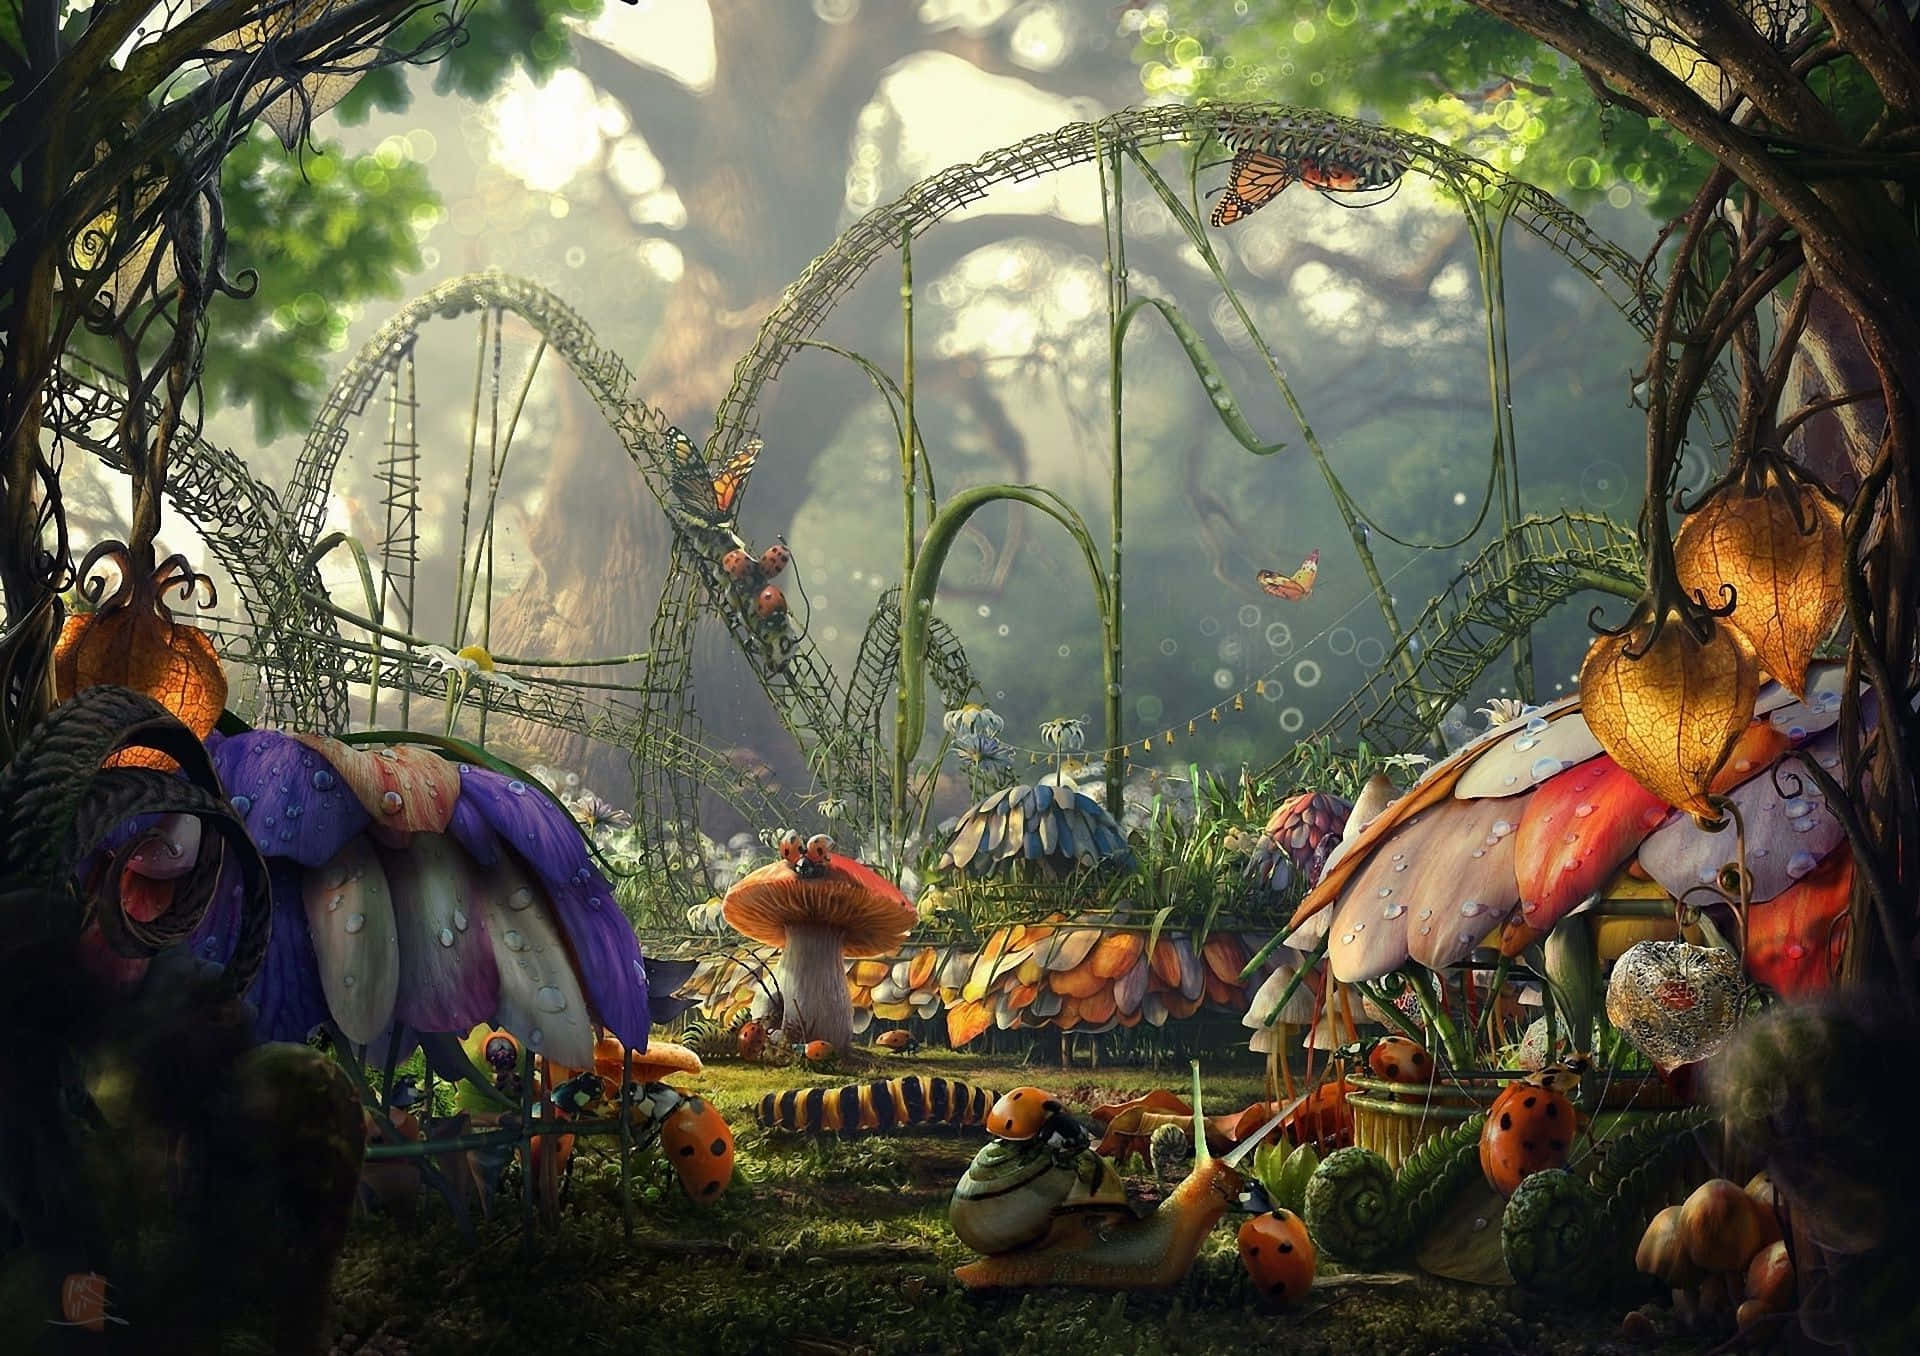 Visit the mysterious world of Wonderland